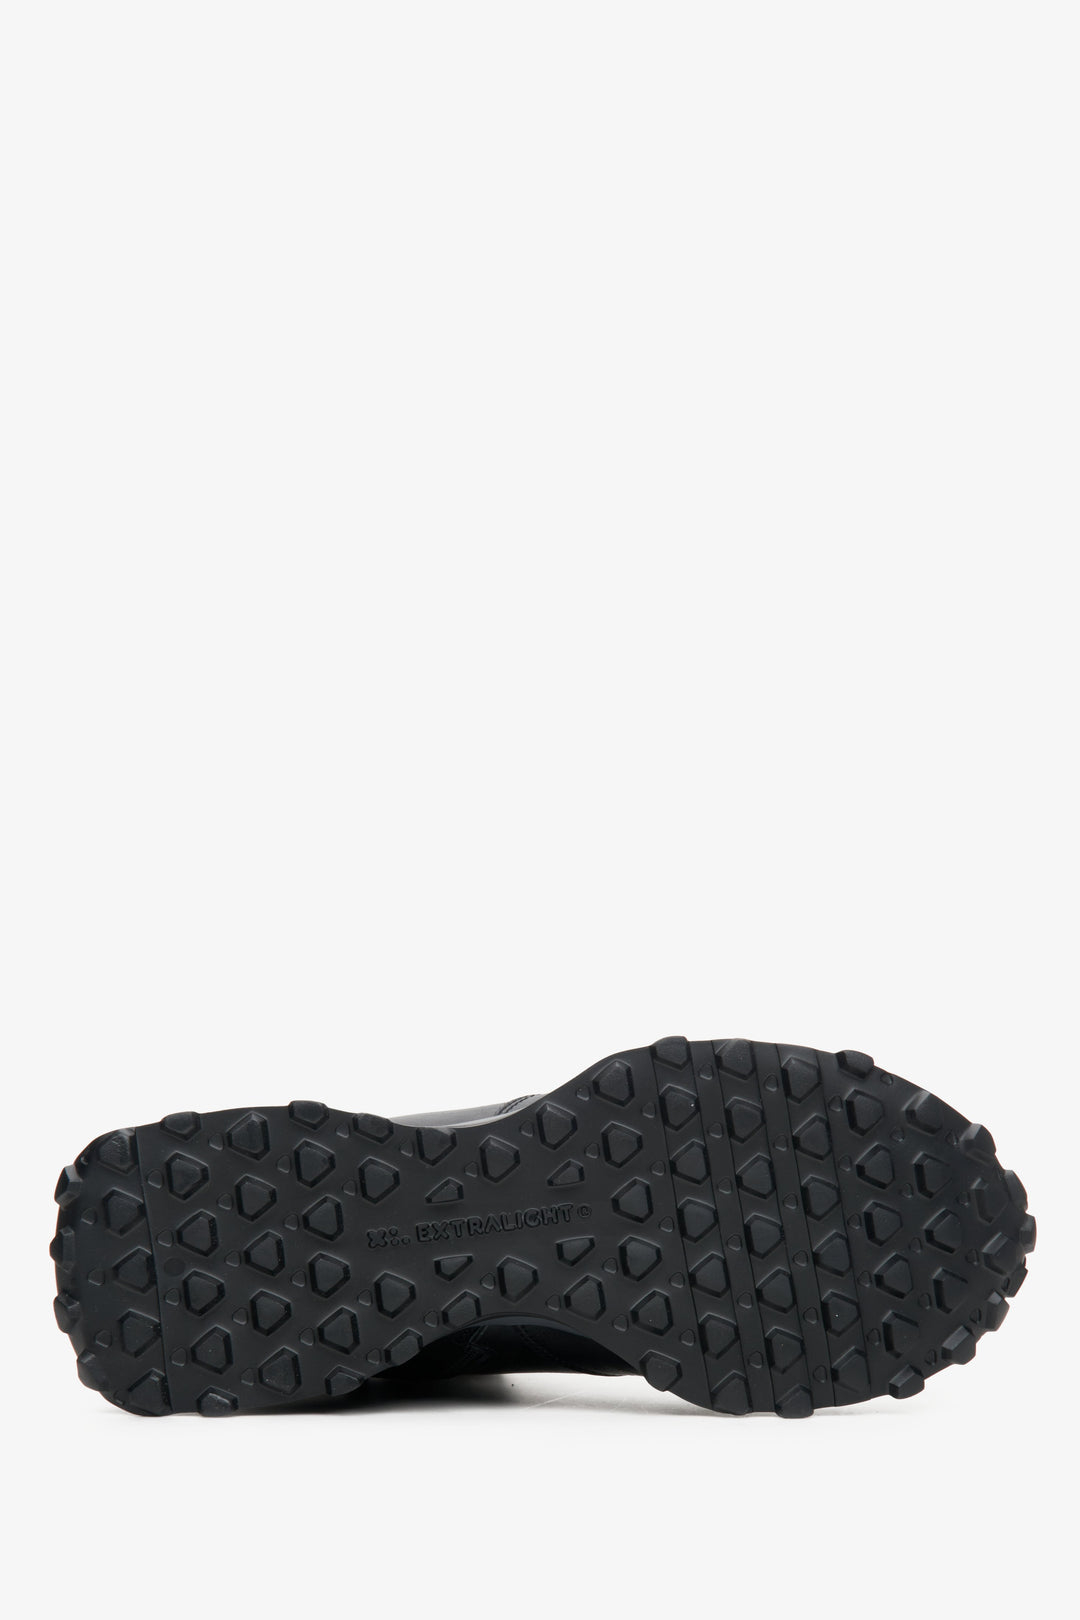 Men's black Estro  sneakers - close-up on the sole.